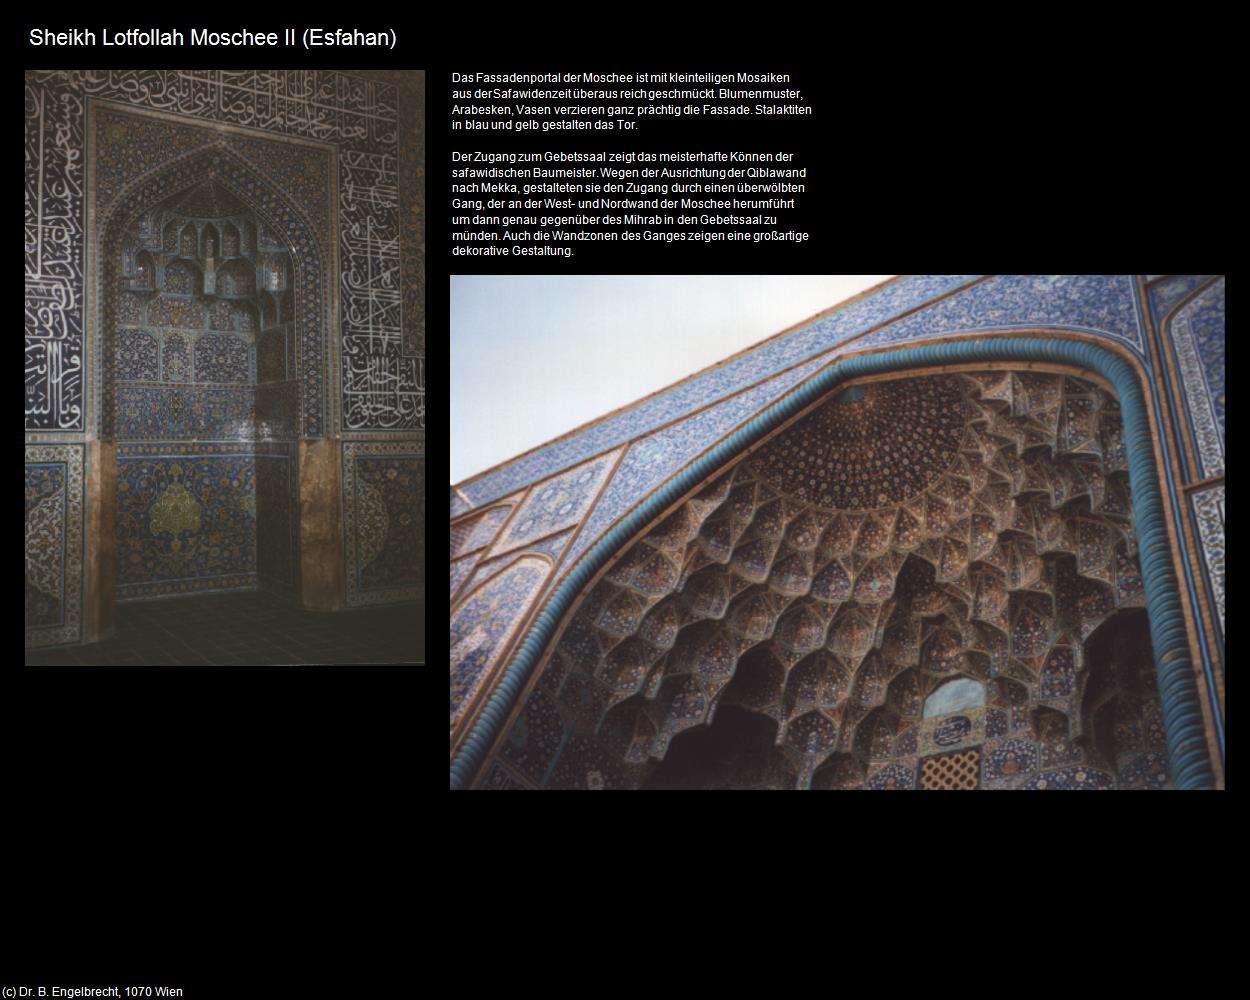 Sheikh Lotfollah Moschee II (Esfahan) in Iran